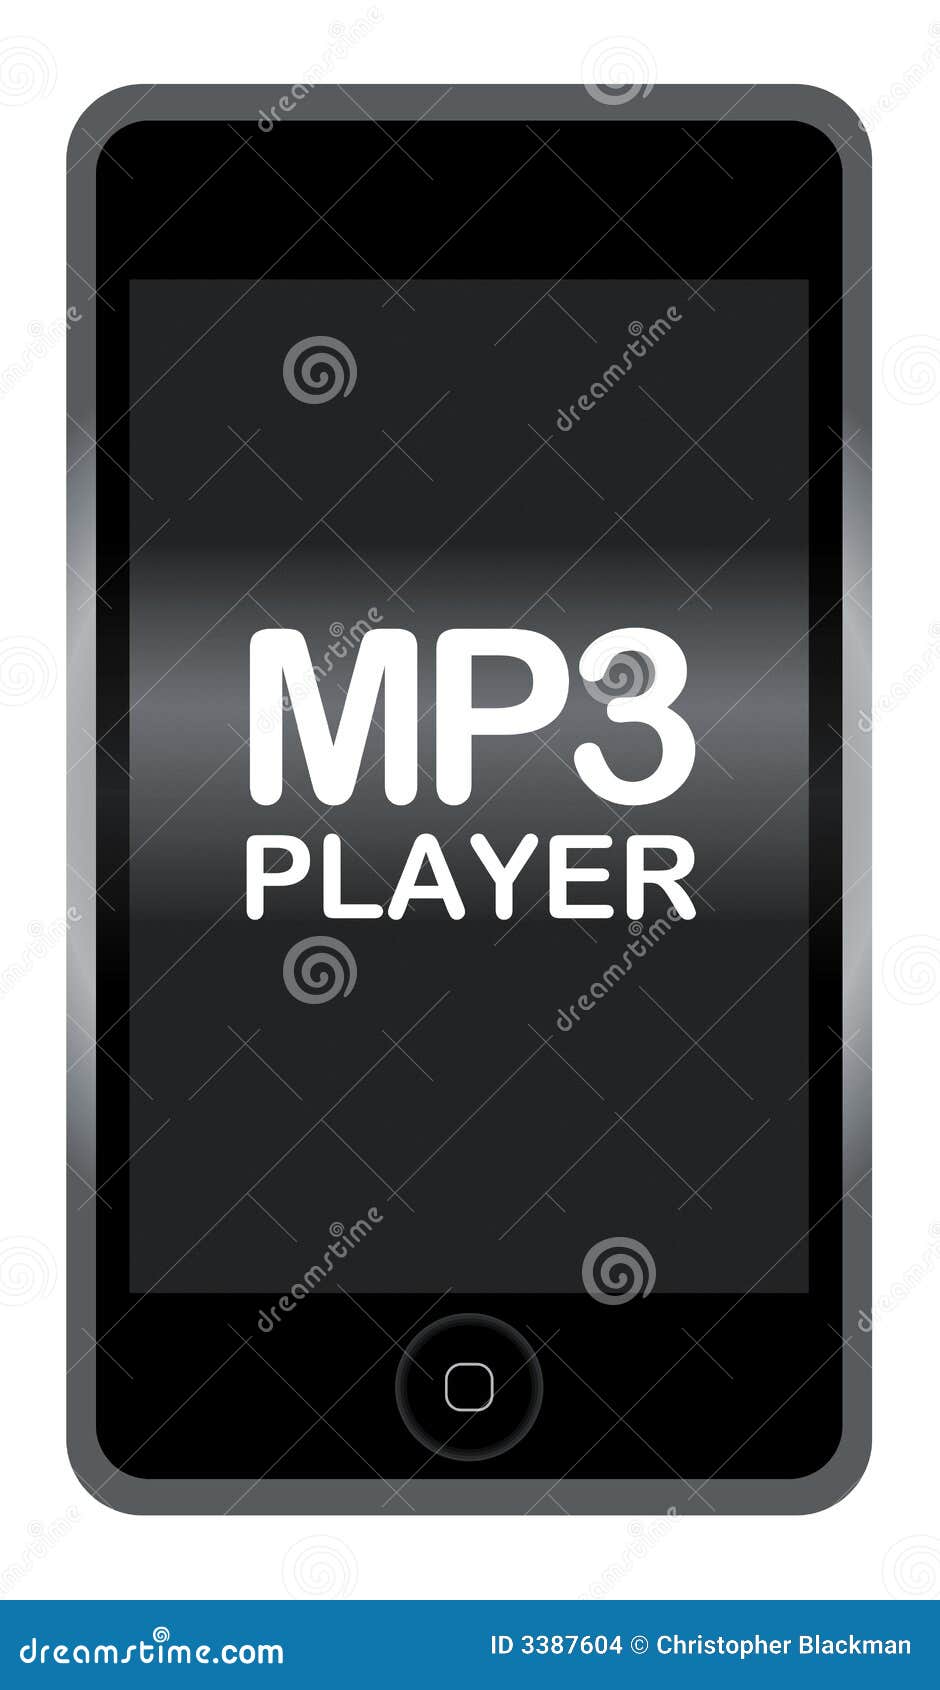 mp3 player